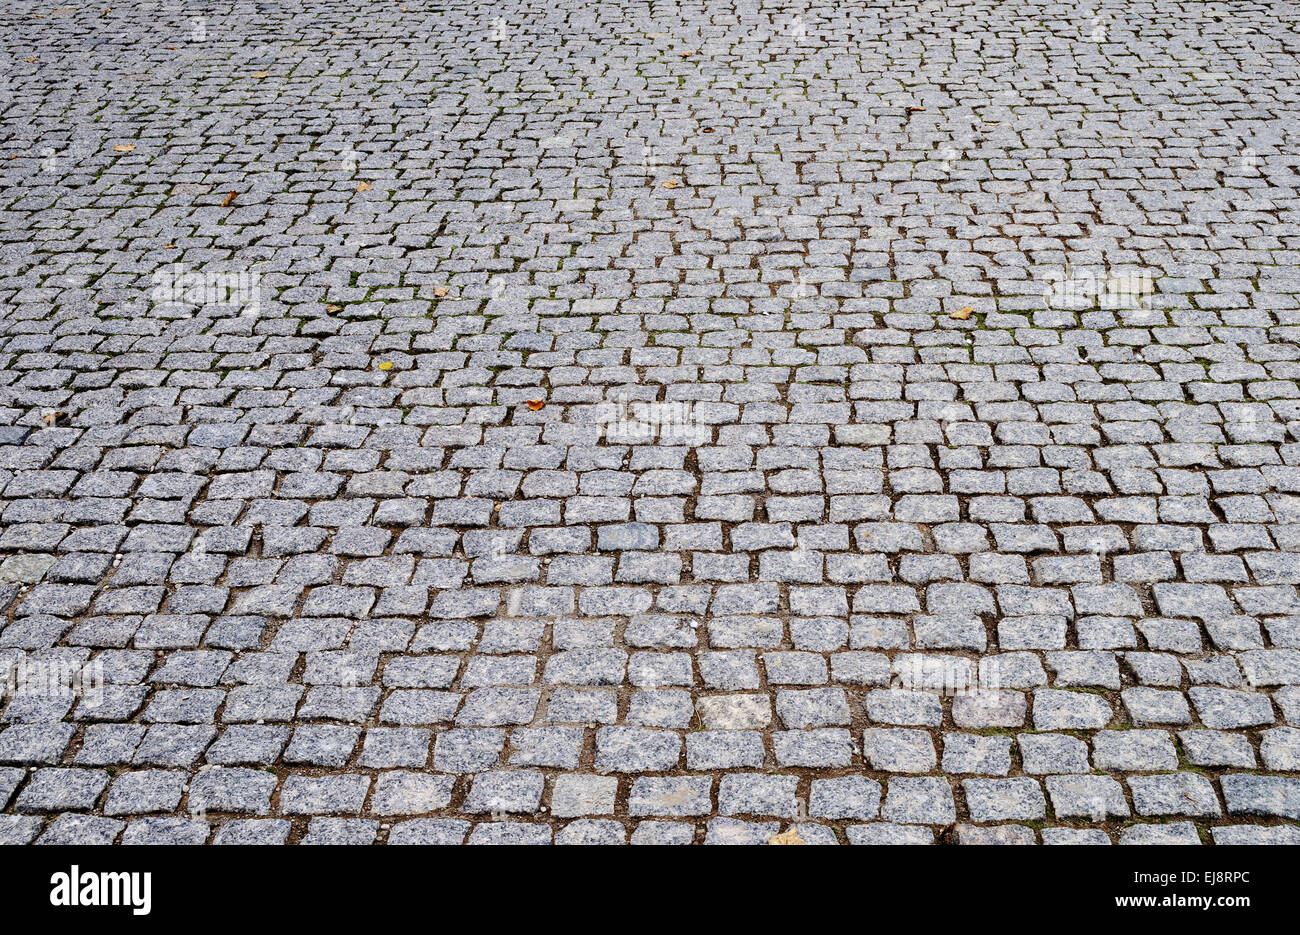 Perspective background of cobblestone pavement Stock Photo